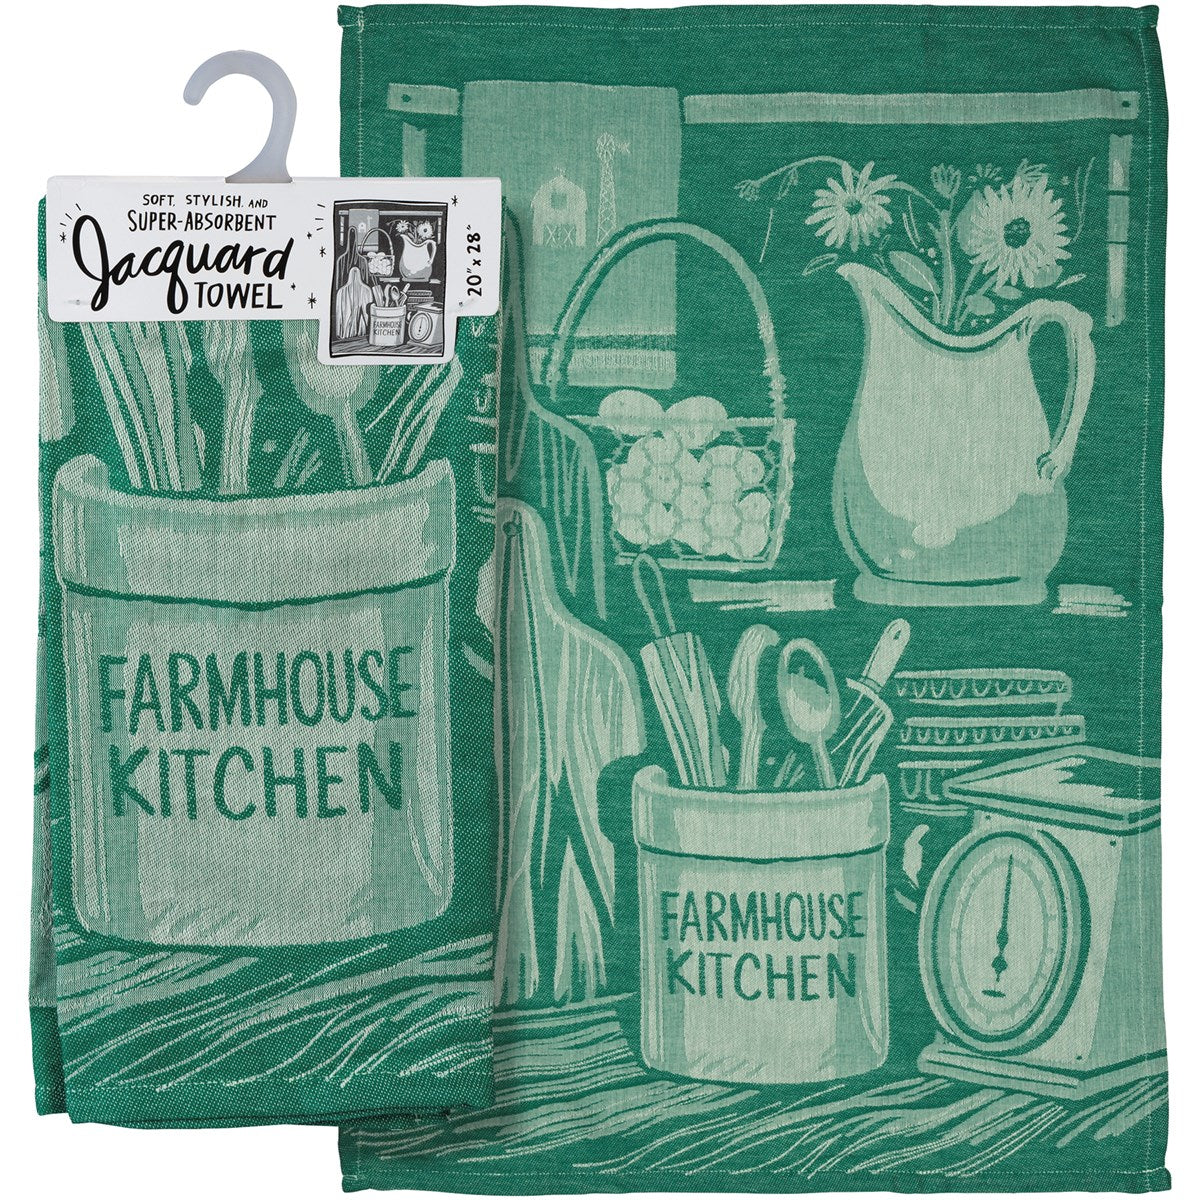 "FARMHOUSE KITCHEN" DISH TOWEL